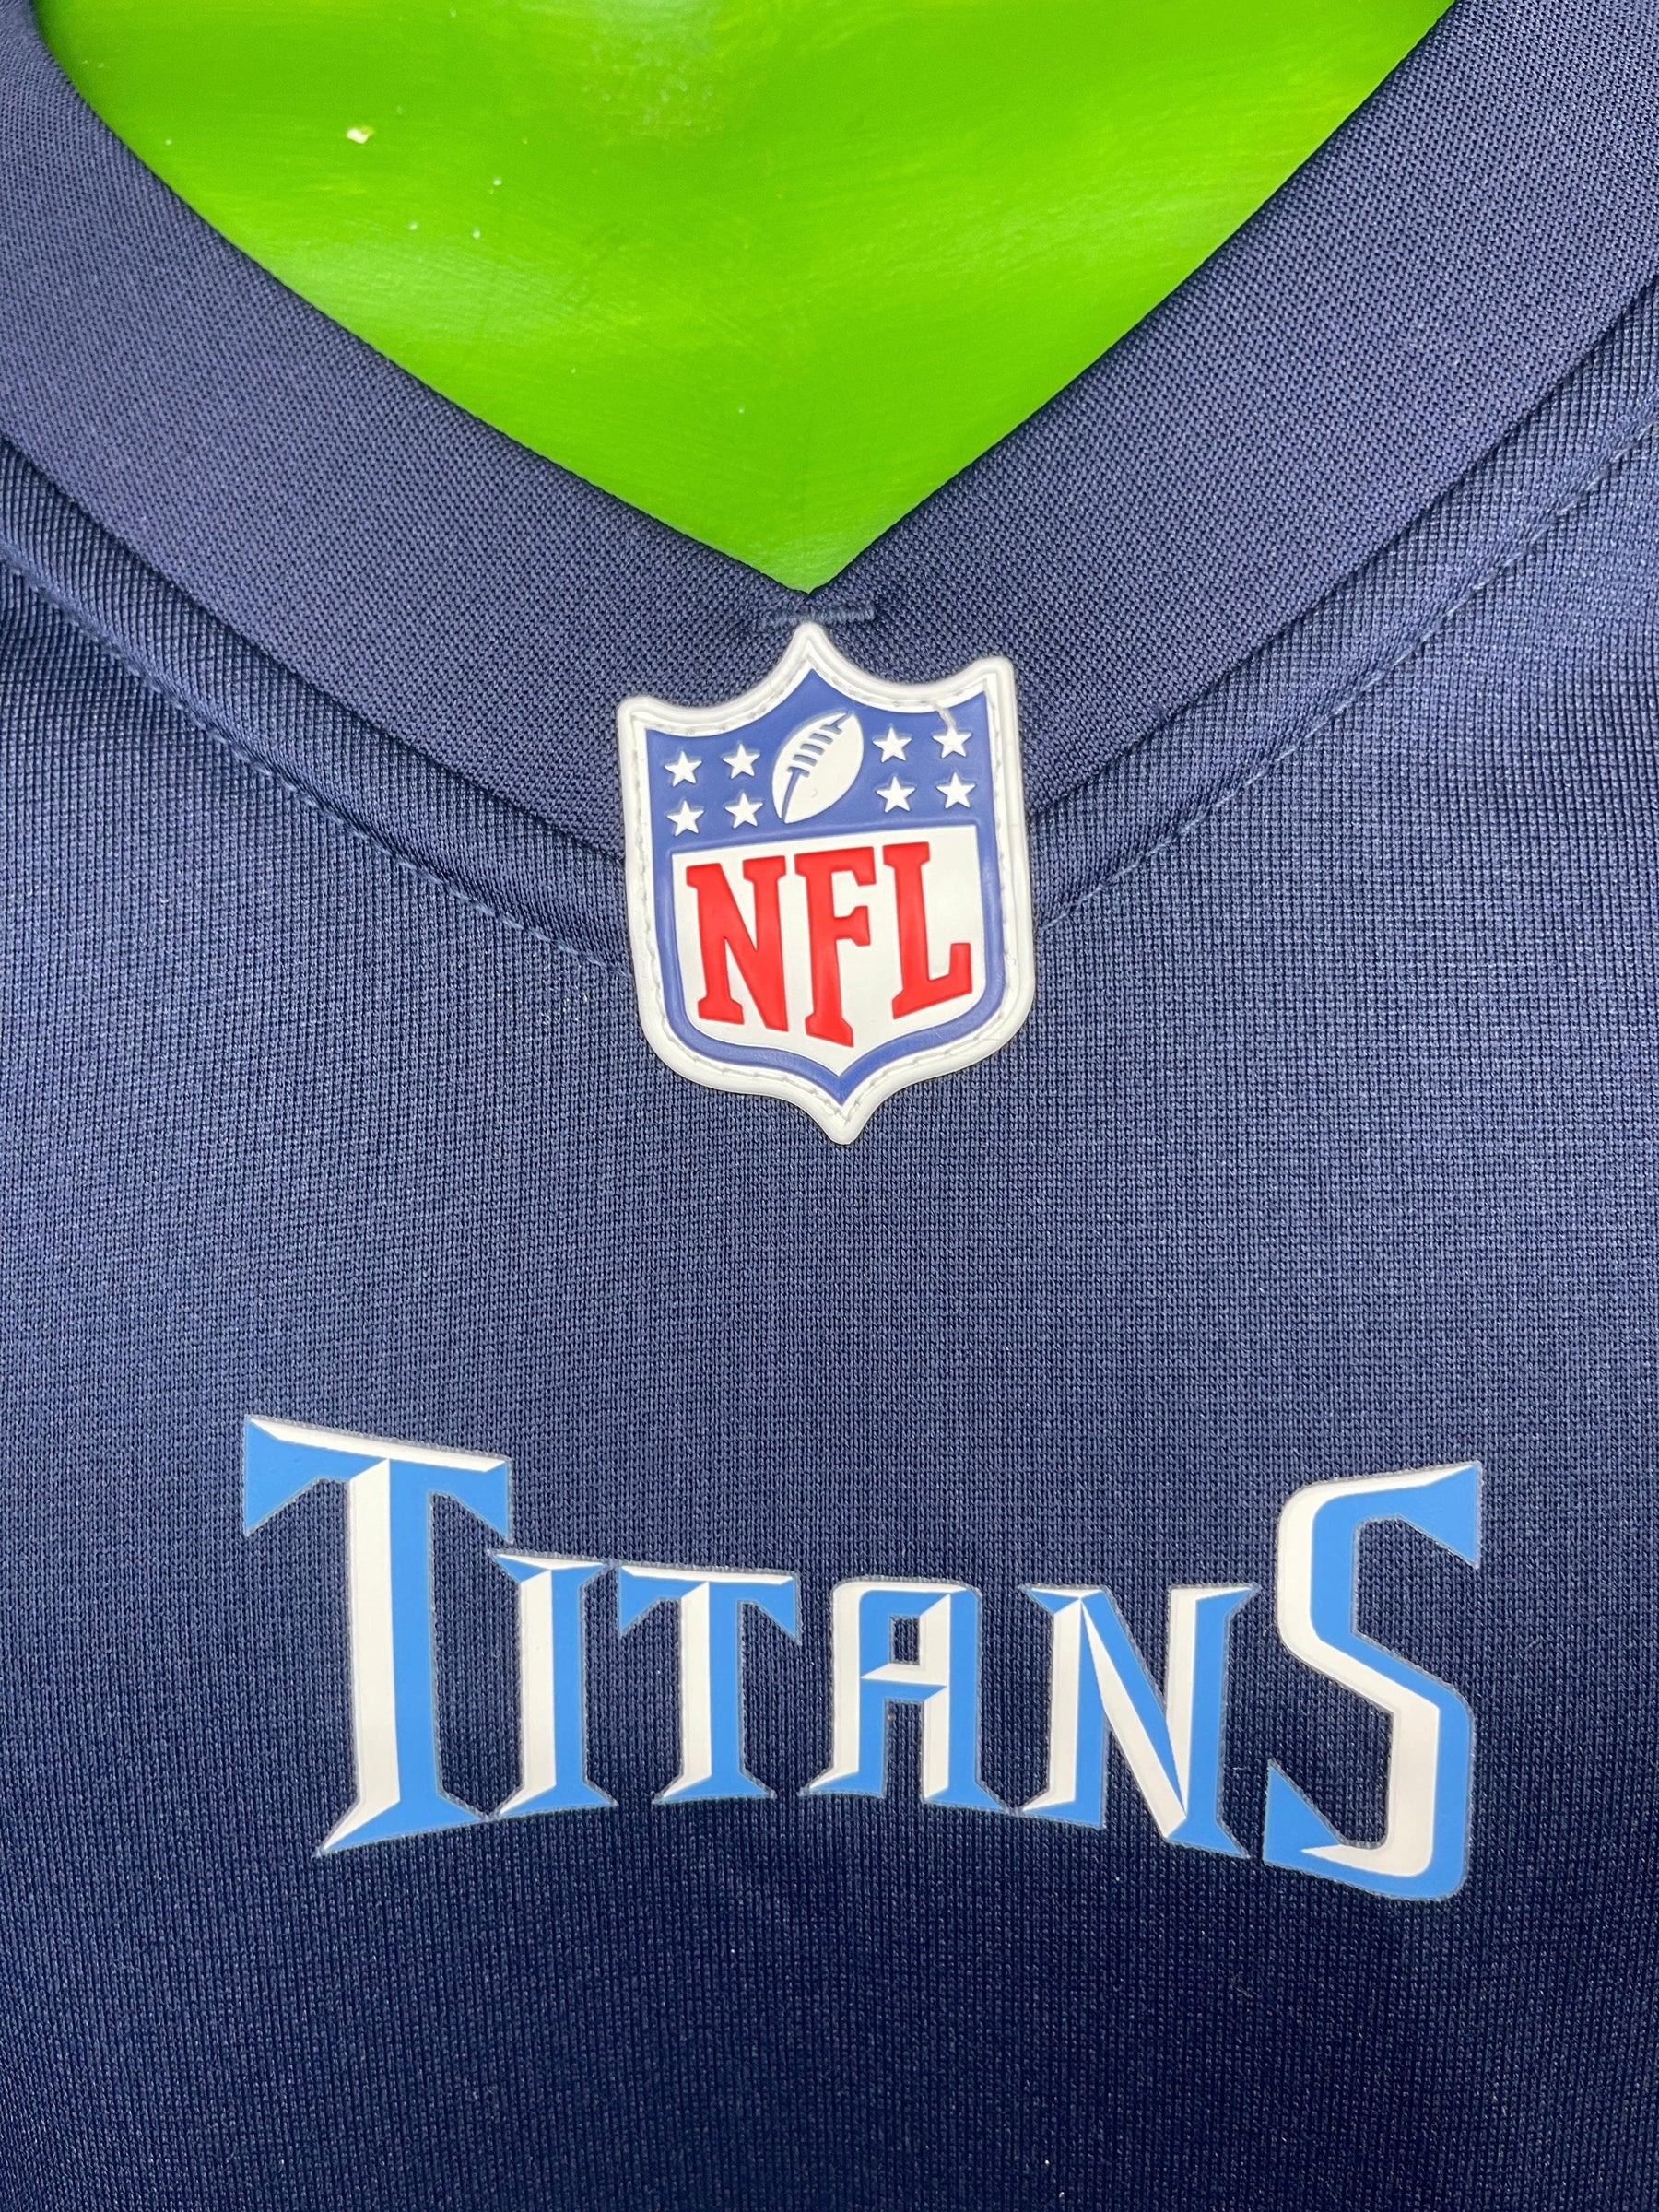 NFL Tennessee Titans AJ Brown #11 Game Jersey Men's Medium NWT